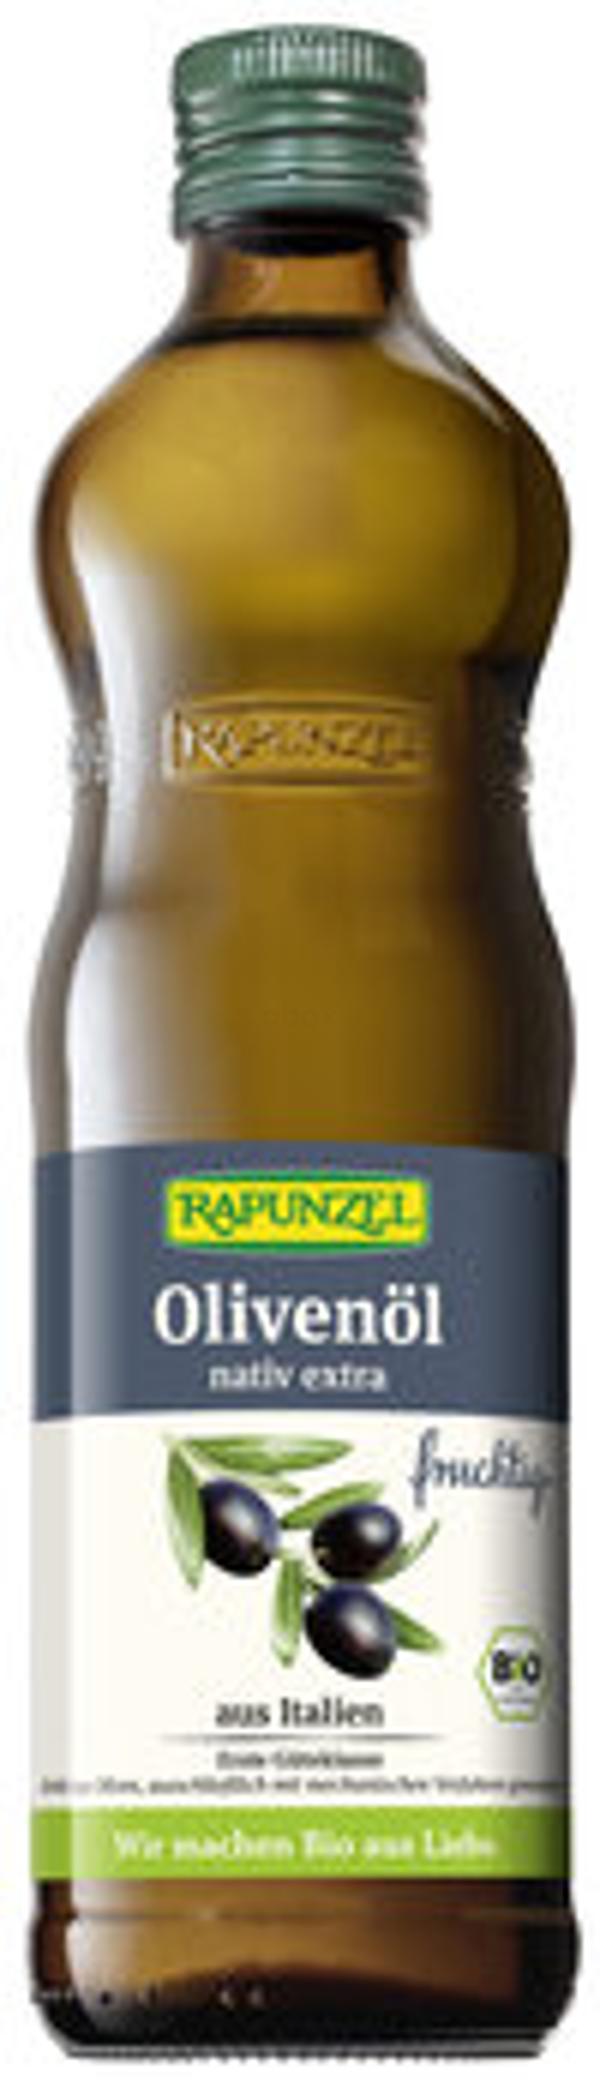 Produktfoto zu Olivenöl 0,5 l